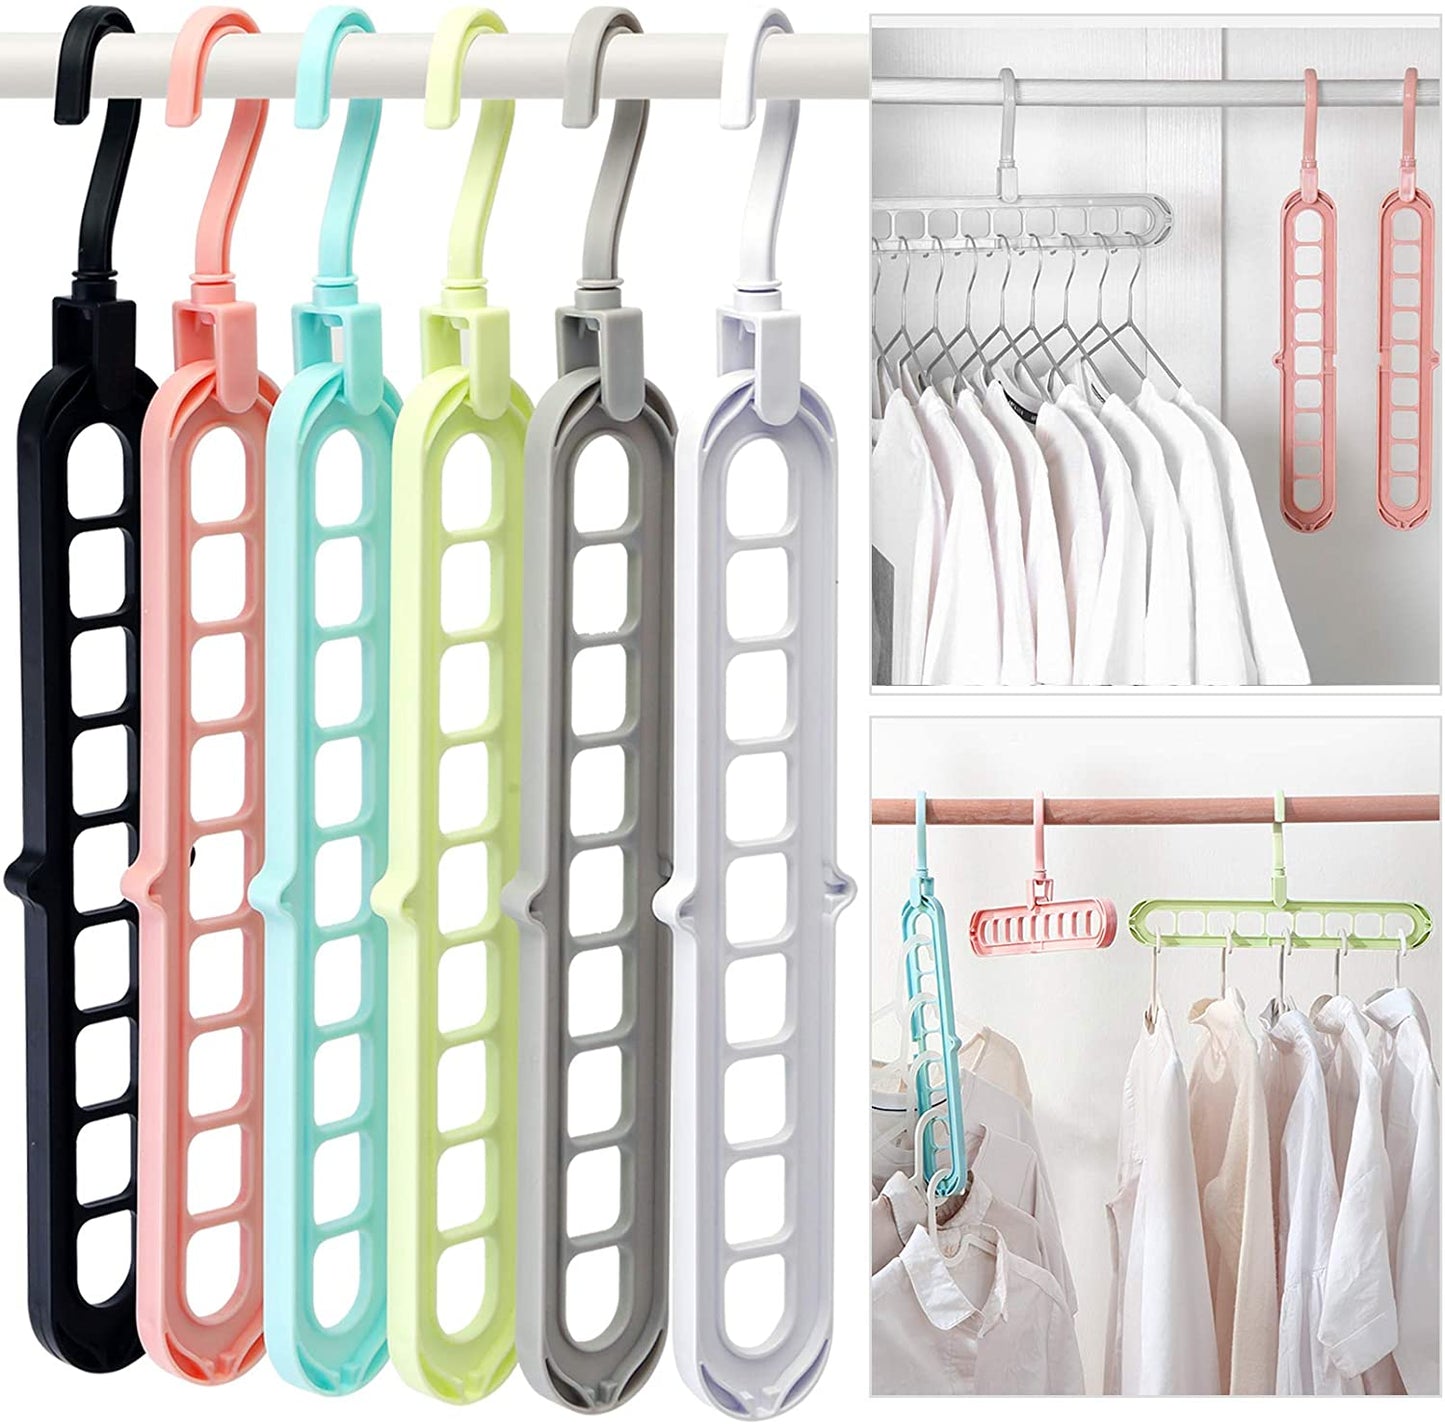 Magic Hanger - 9 Hole Hanger - Smart Cloth Organizing